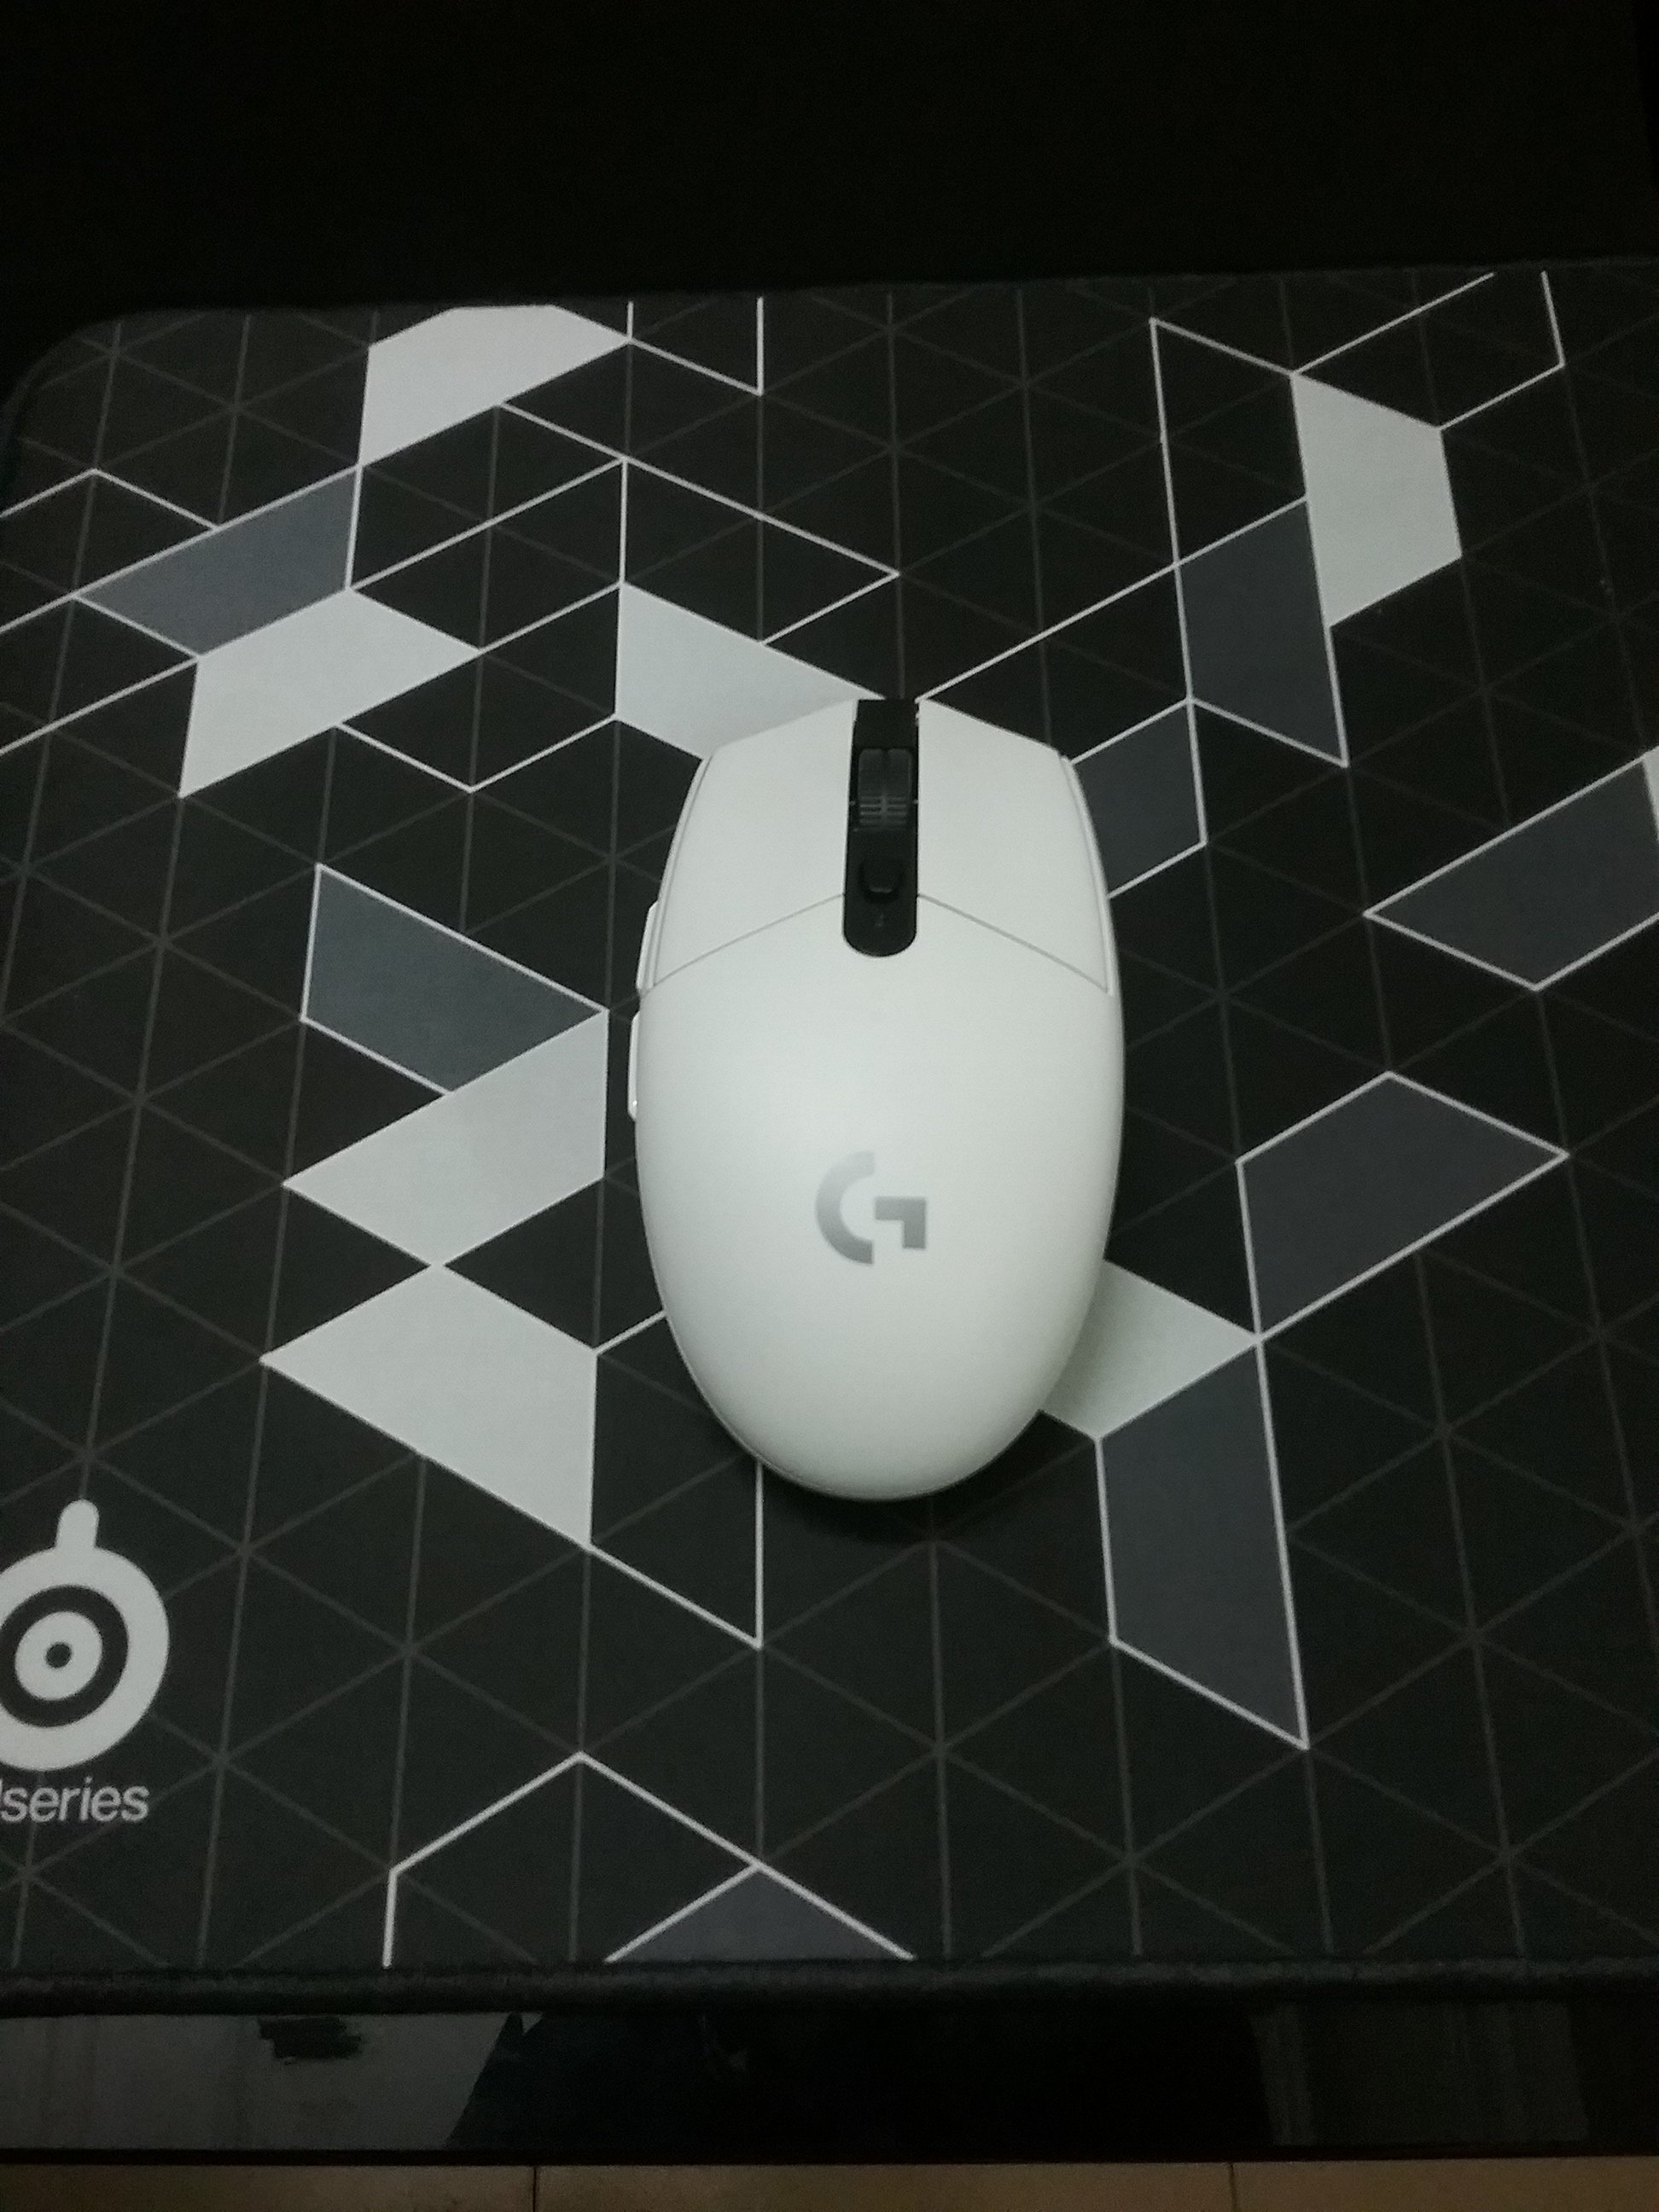 [Review] Wireless Mice logitech g305